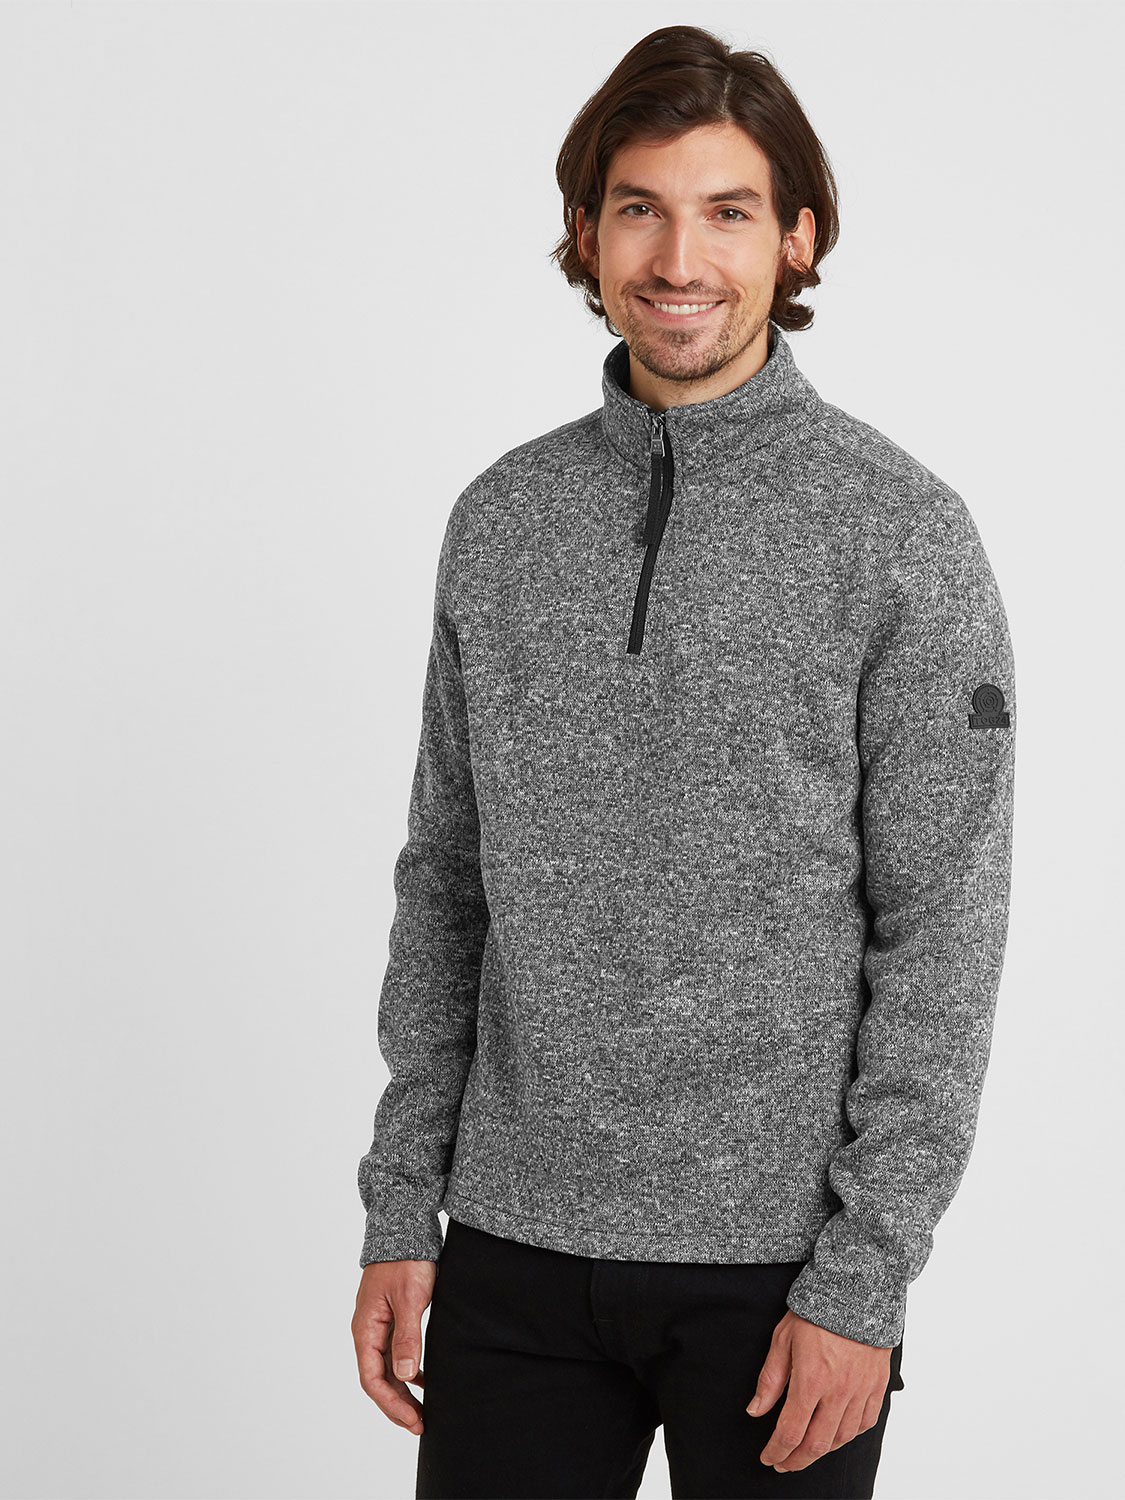 Pearson Knitlook Fleece Zipneck - Size: 3XL Men’s Grey Tog24